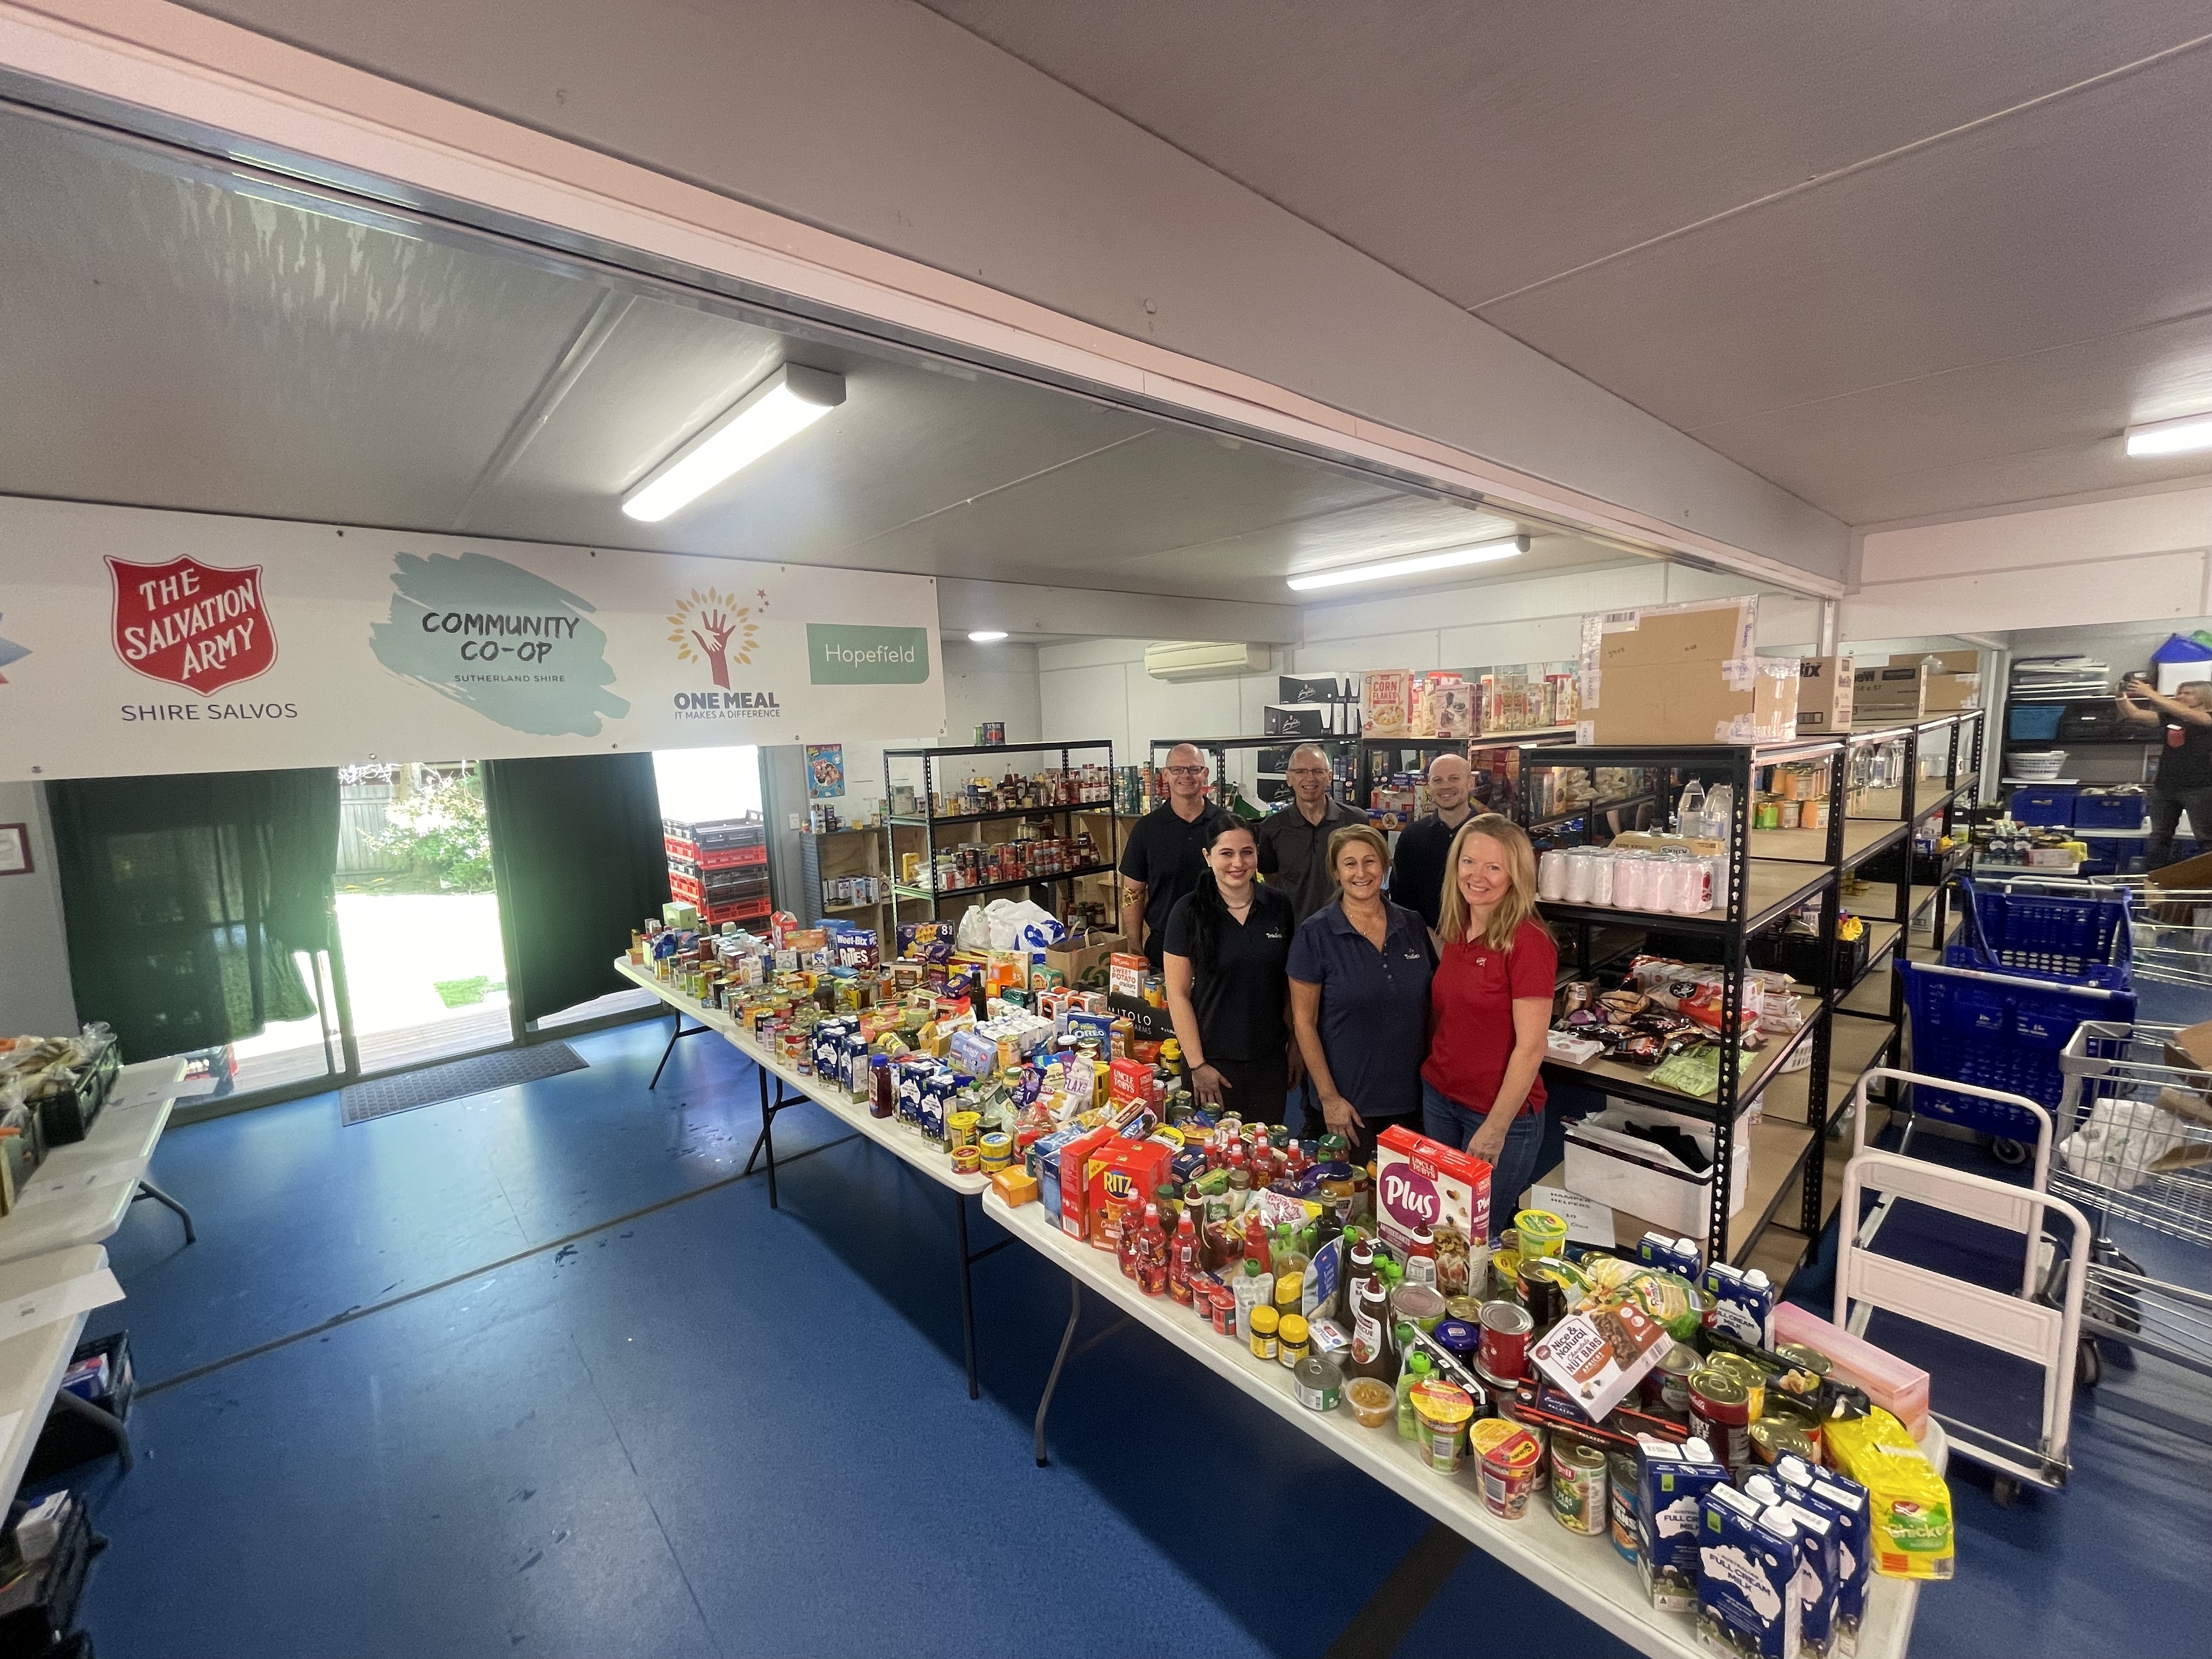 God's provision fills bare shelves at Shire Salvos